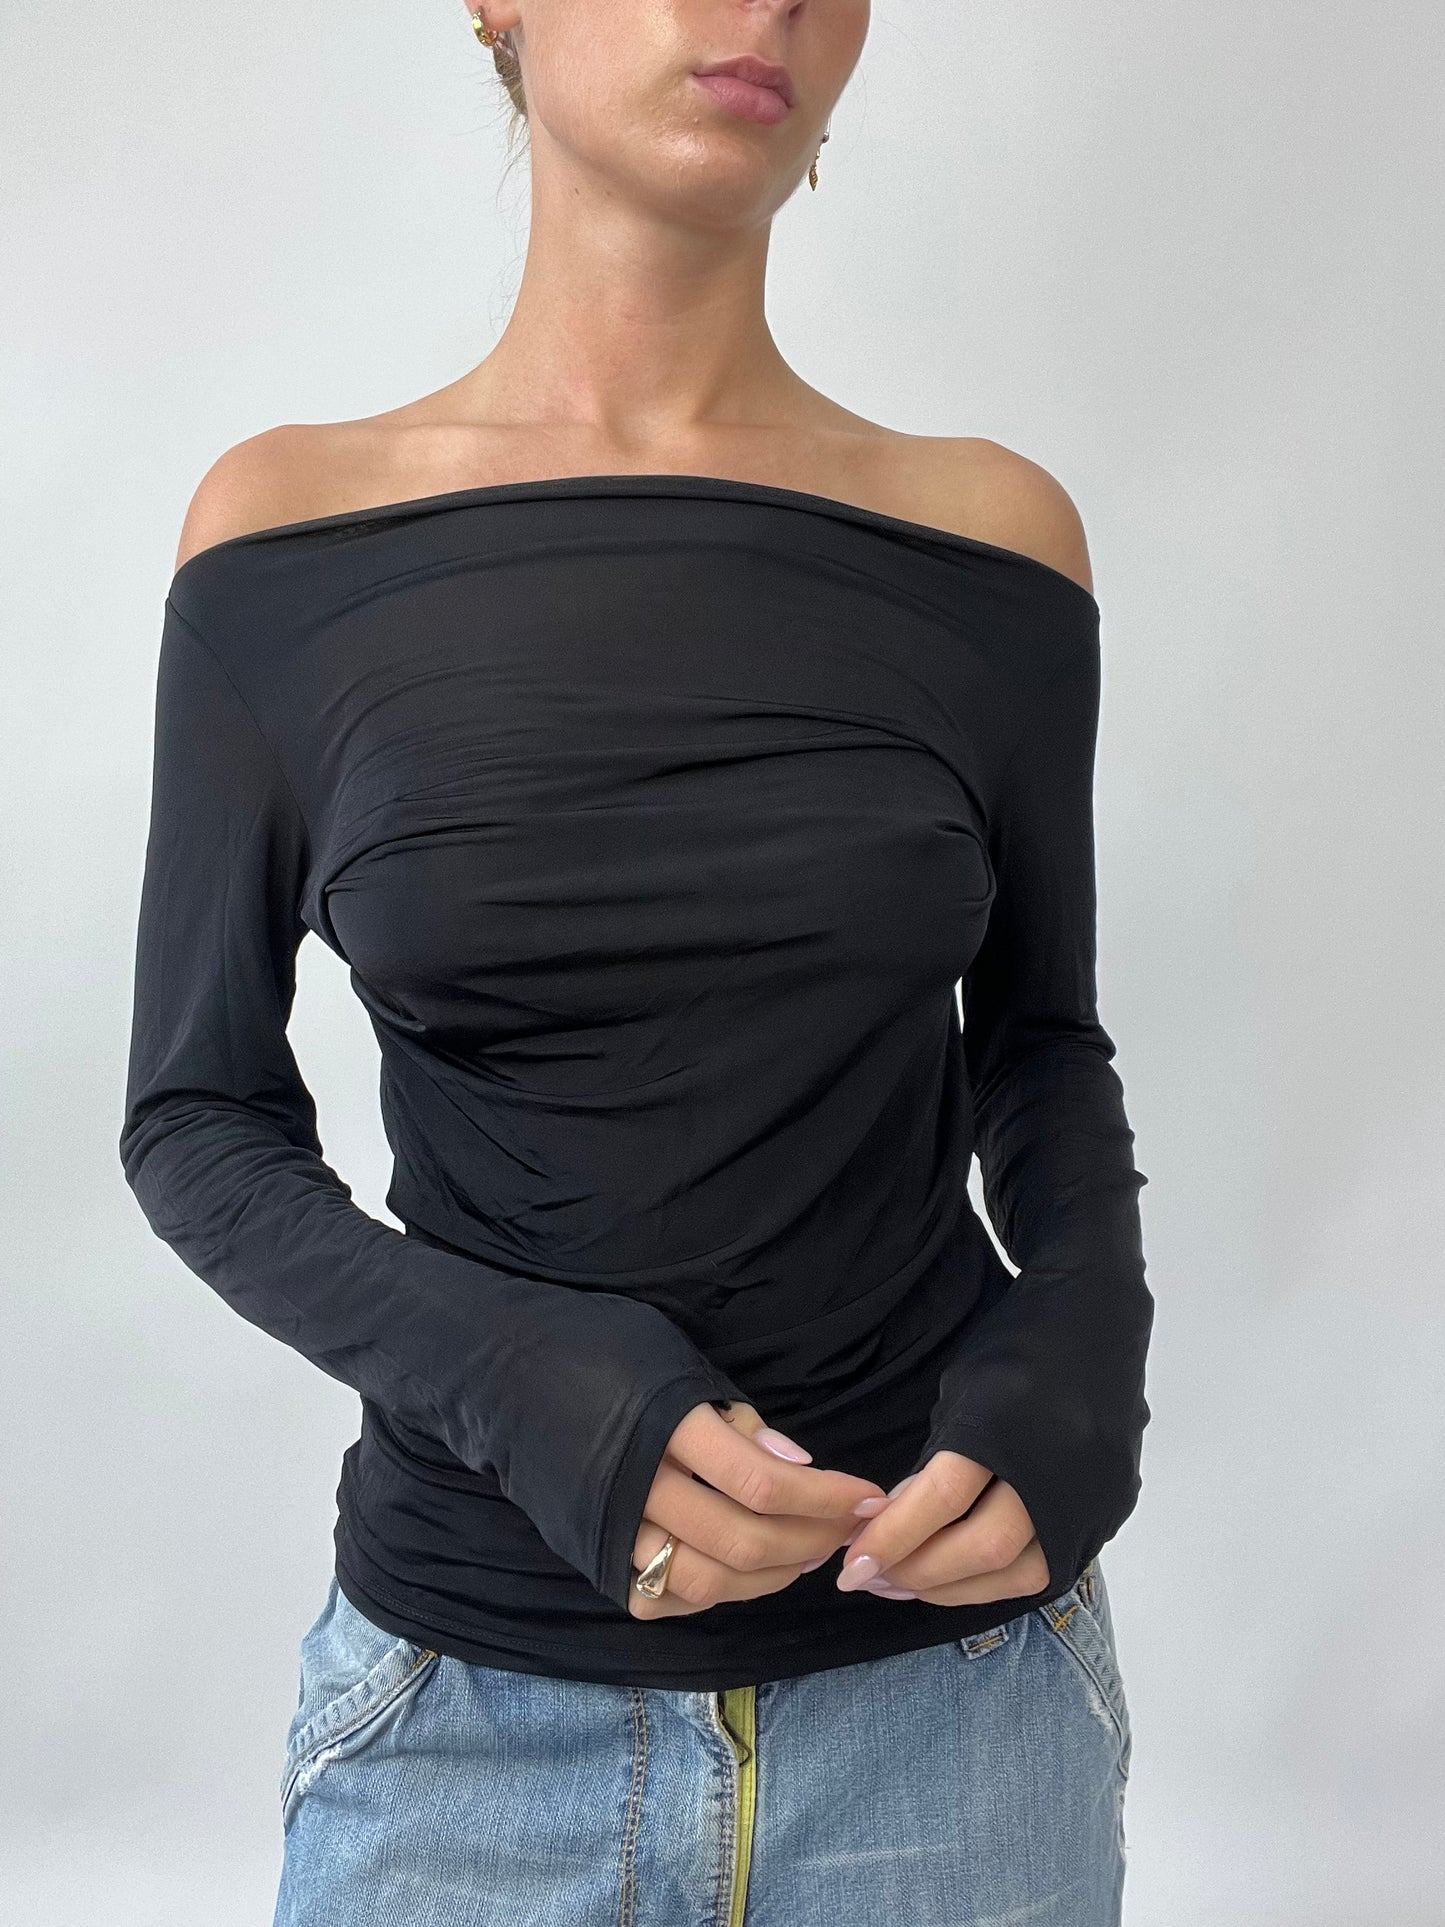 PUB GARDEN DROP | medium black united colors of benetton long sleeve top